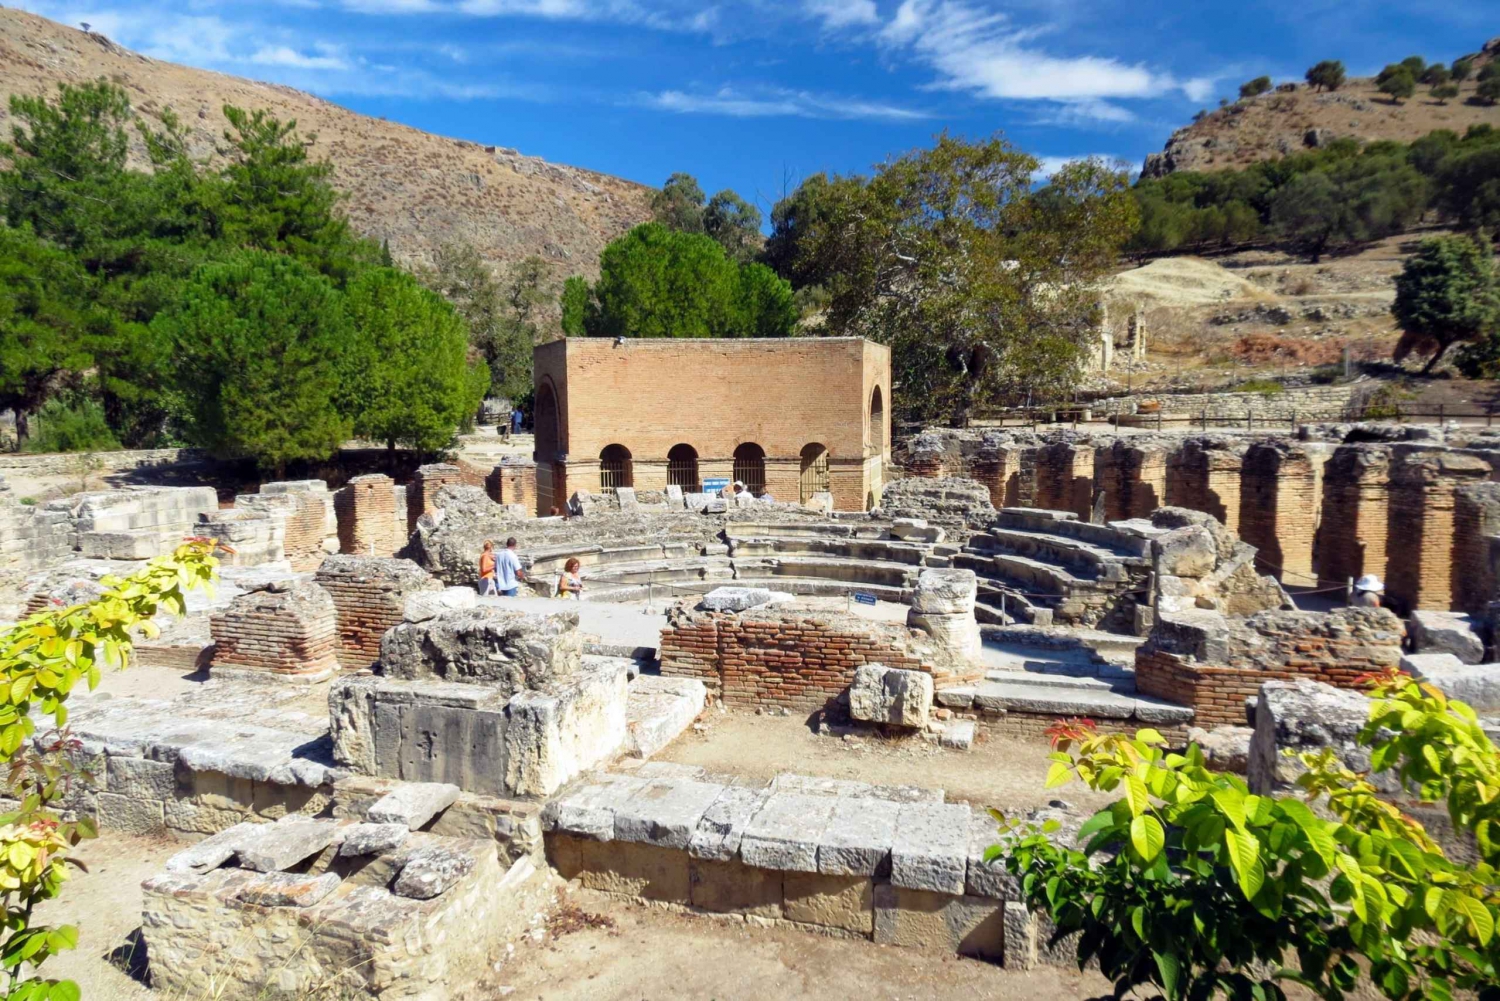 Matala - Ancient Phaistos - Faistos & Gortyn - South Crete